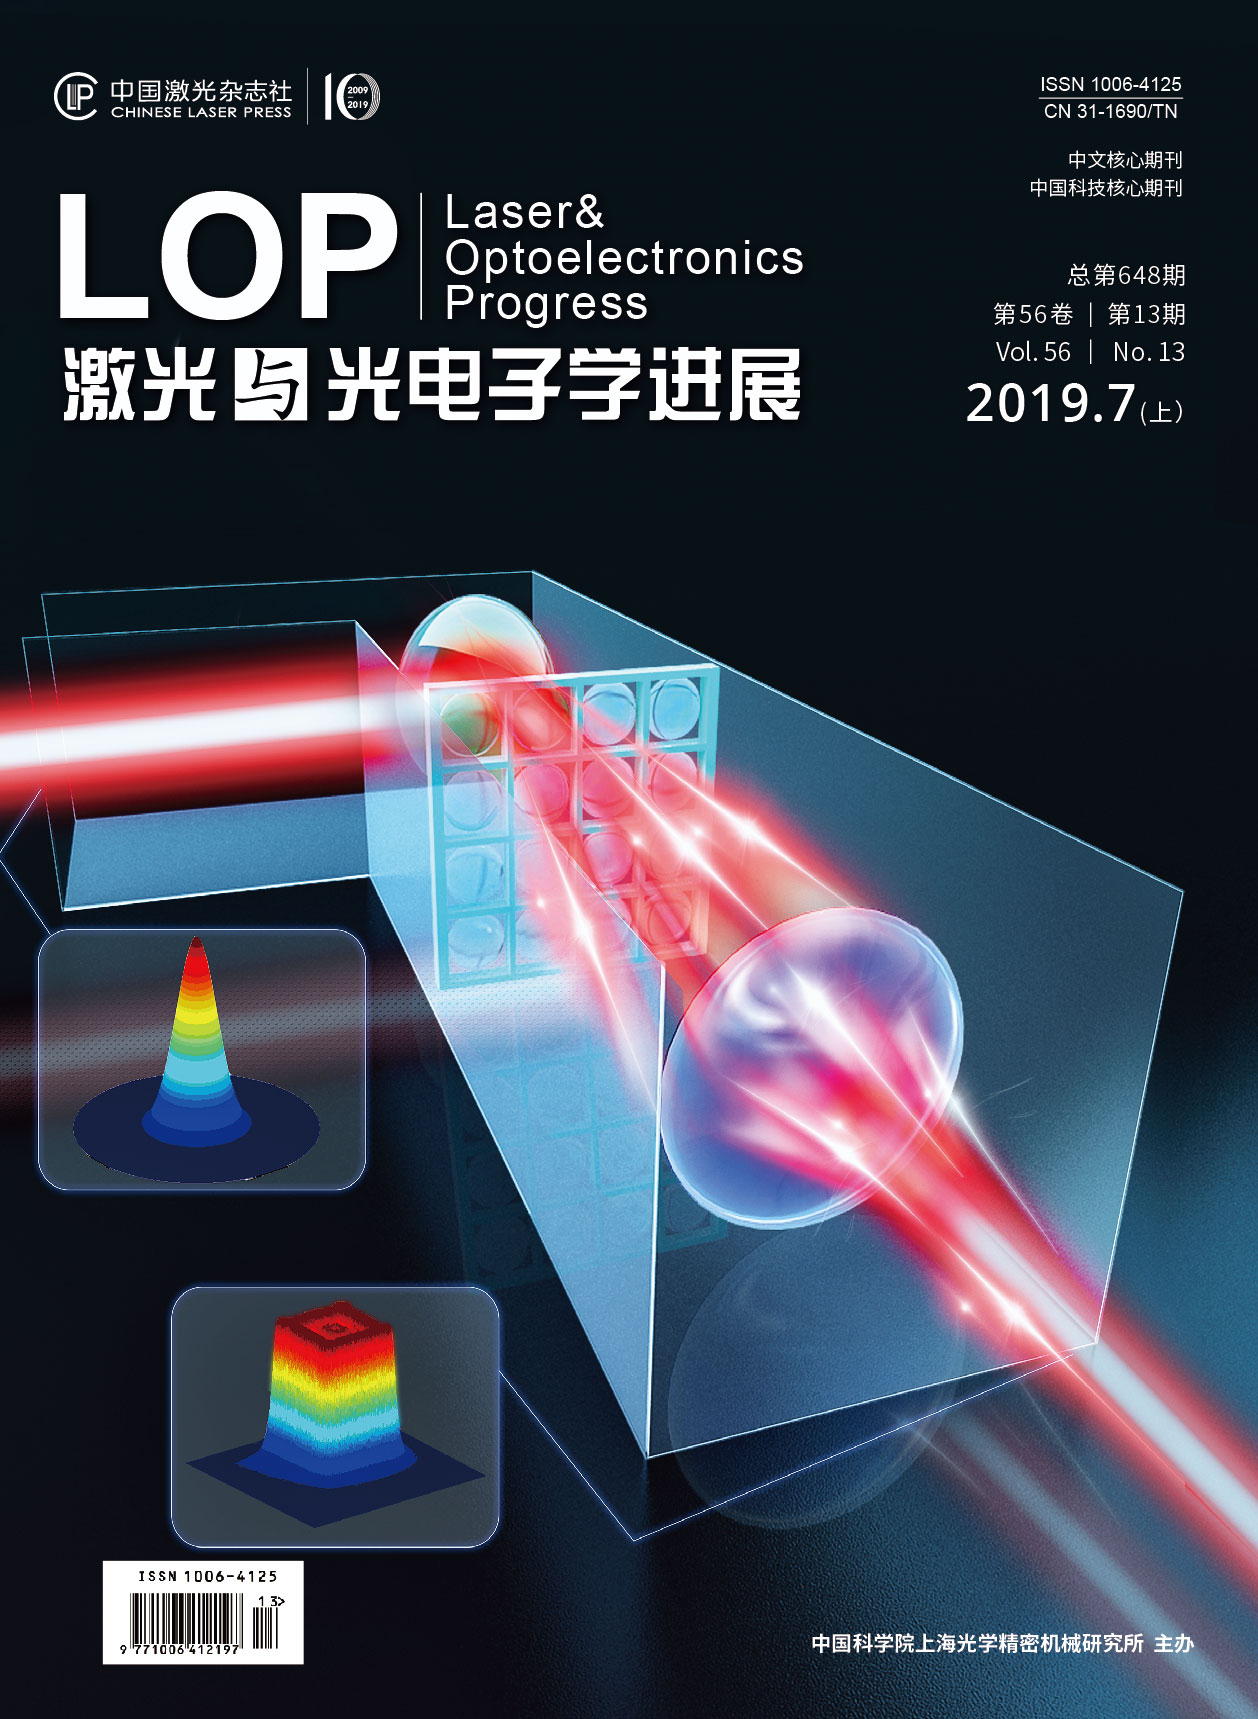 Laser & Optoelectronics Progress